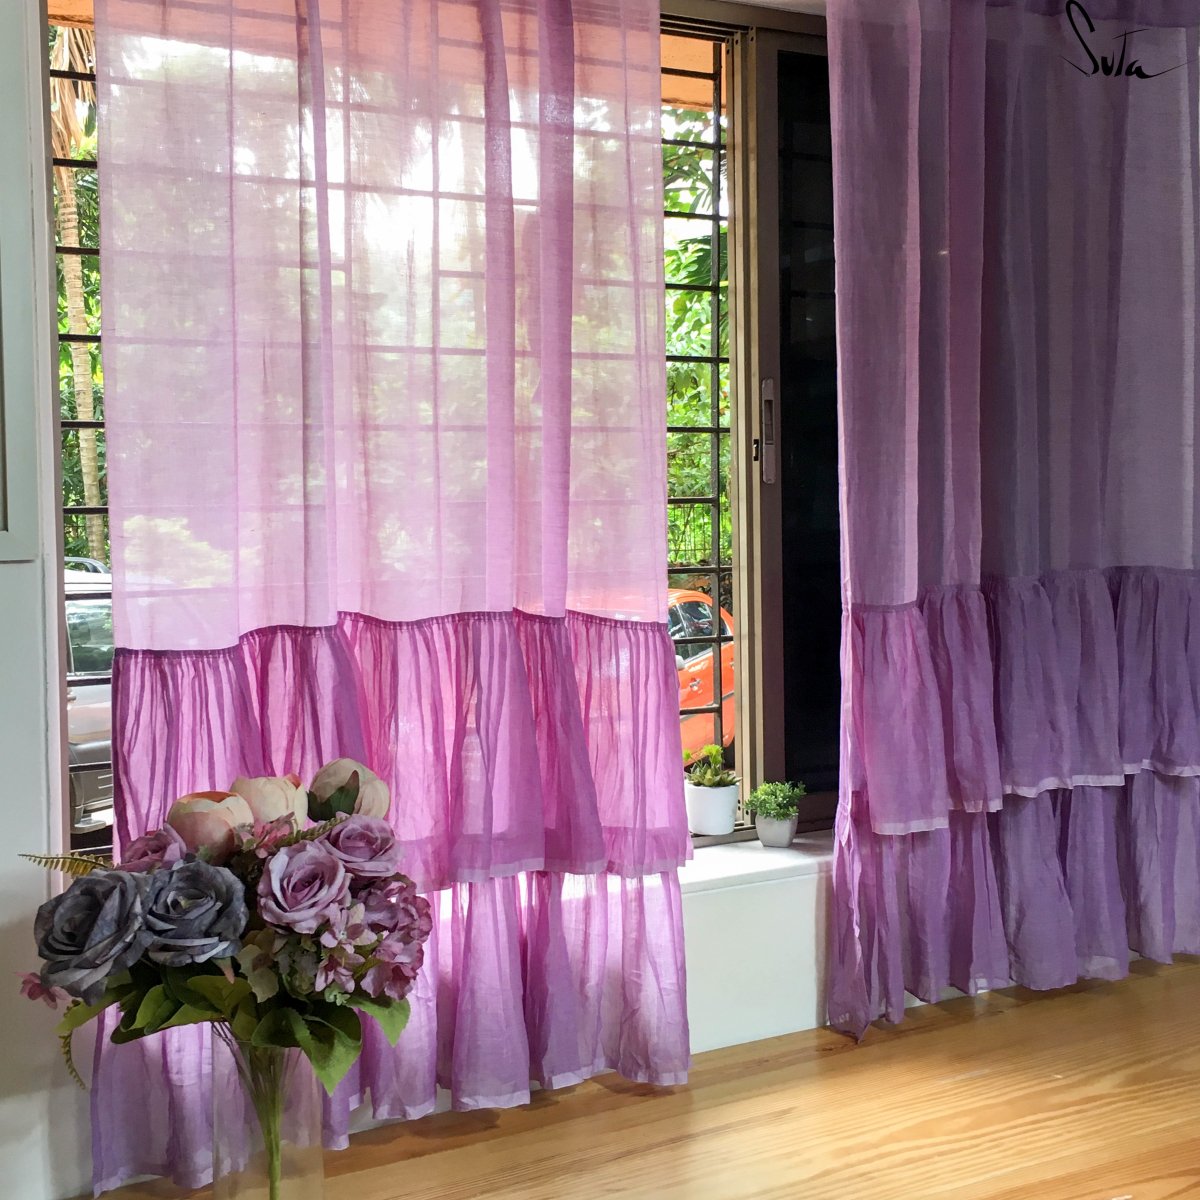 I Dream Of Lavenders (Curtain) - suta.in